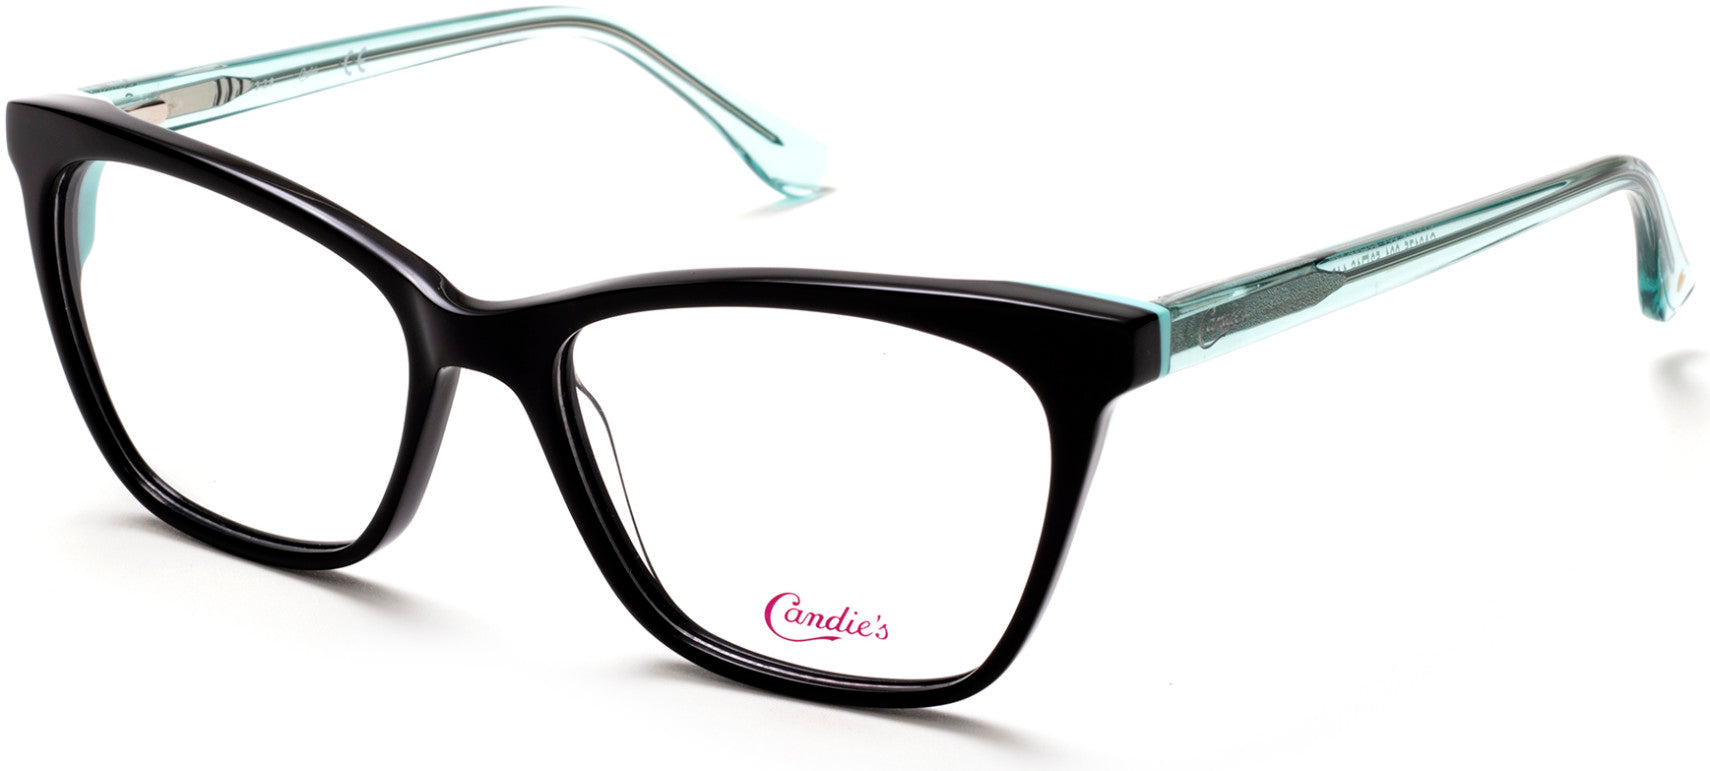 Candies CA0175 Cat Eyeglasses 001-001 - Shiny Black